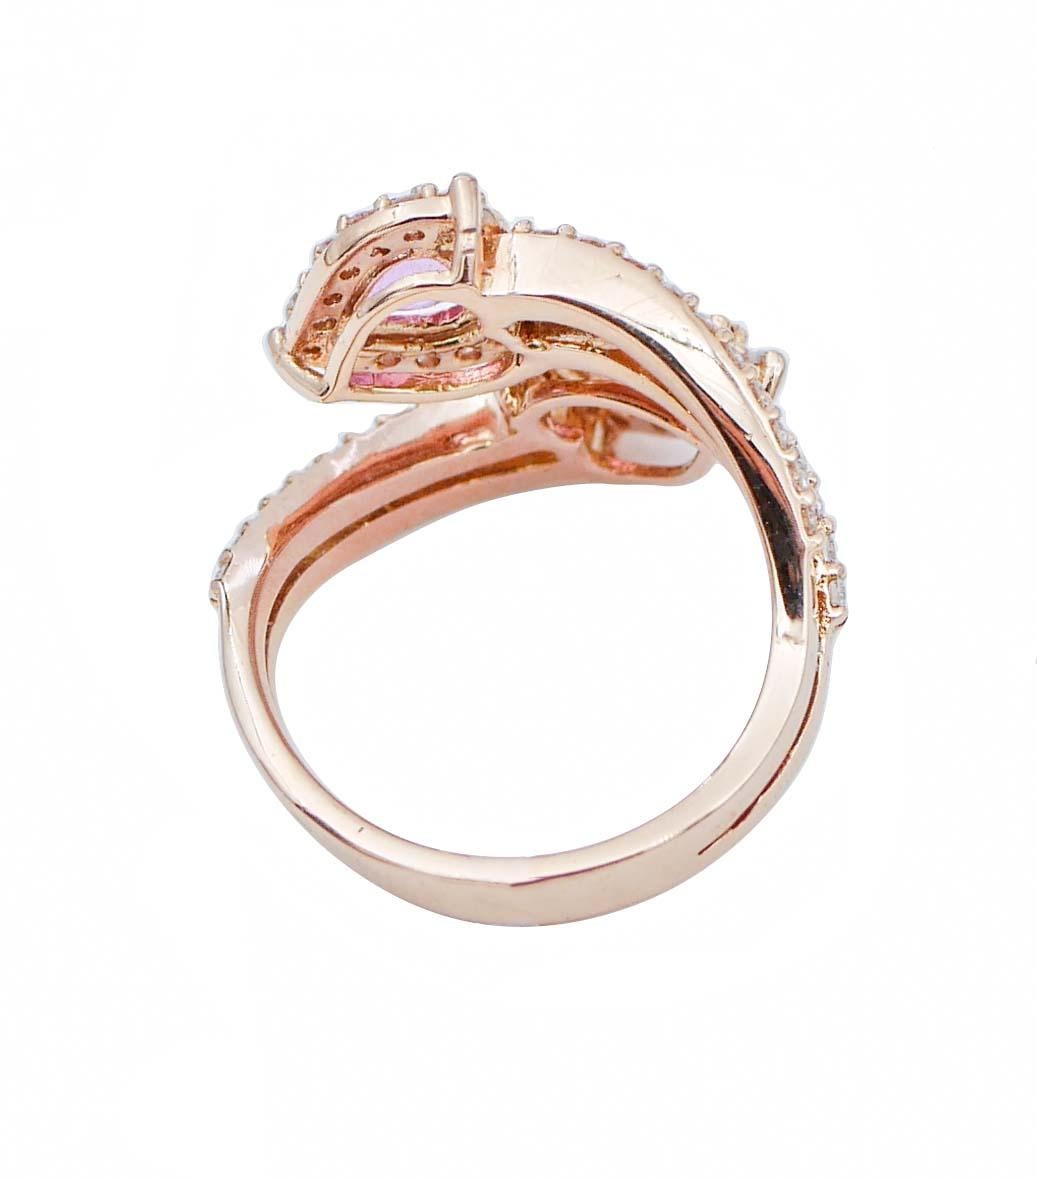 Heart Cut Rubies, Diamonds, 18 Karat Rose Gold Modern Ring. For Sale